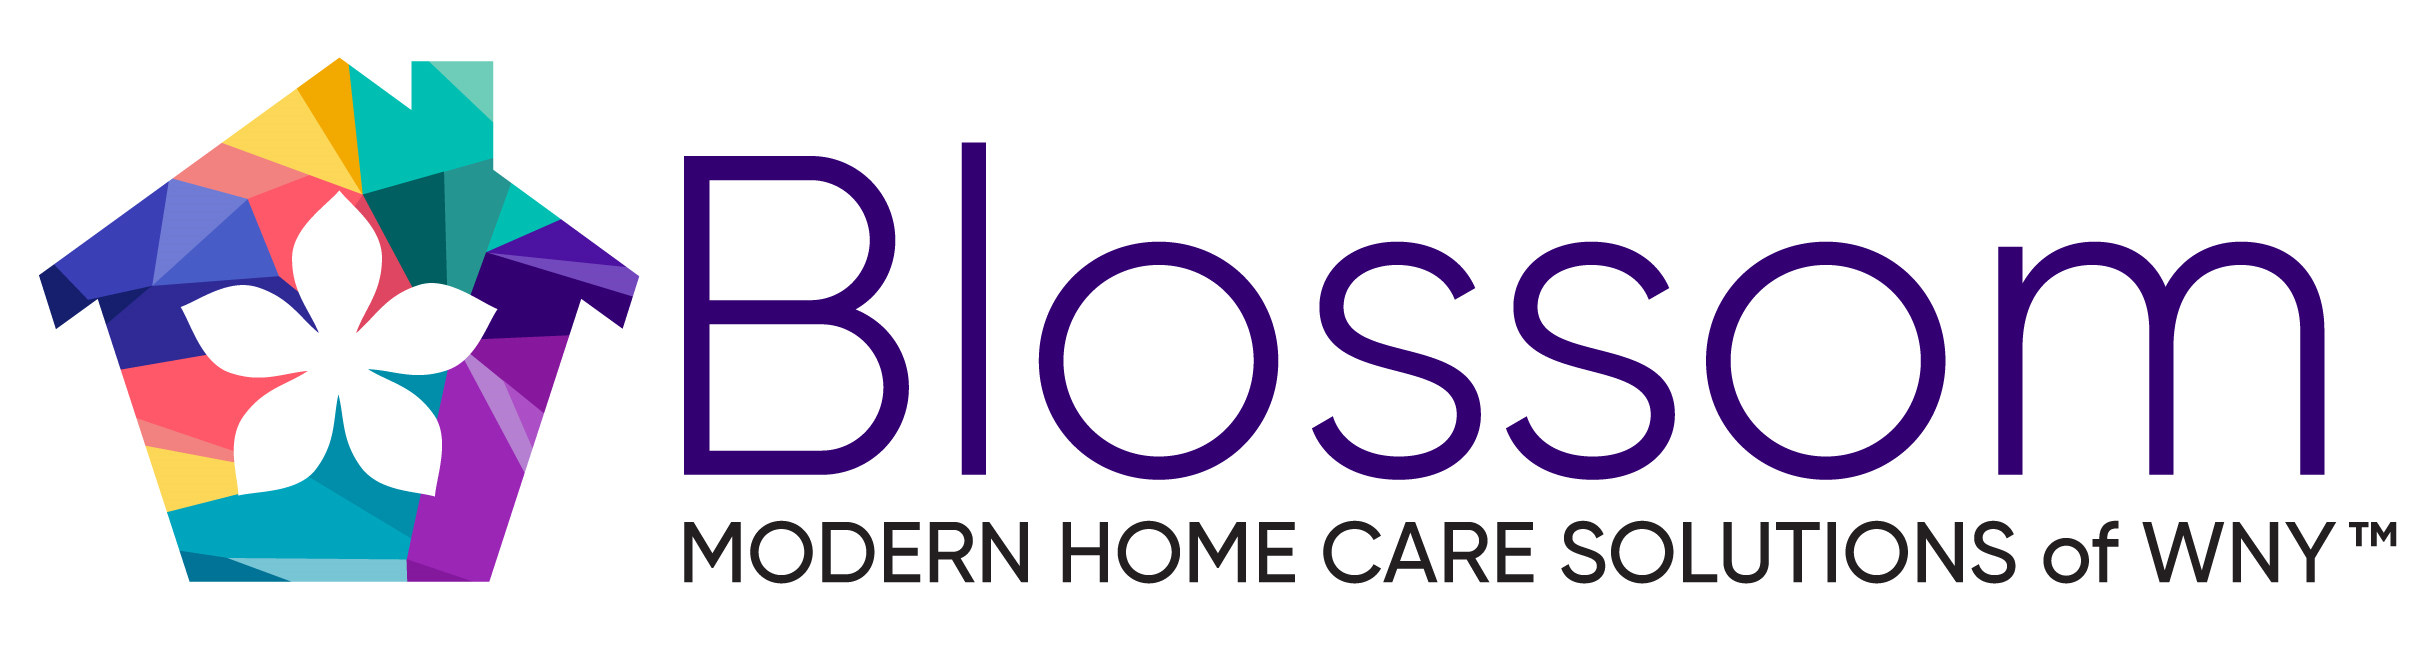 Blossom: Modern Home Care Solutions of Western New York Company Logo